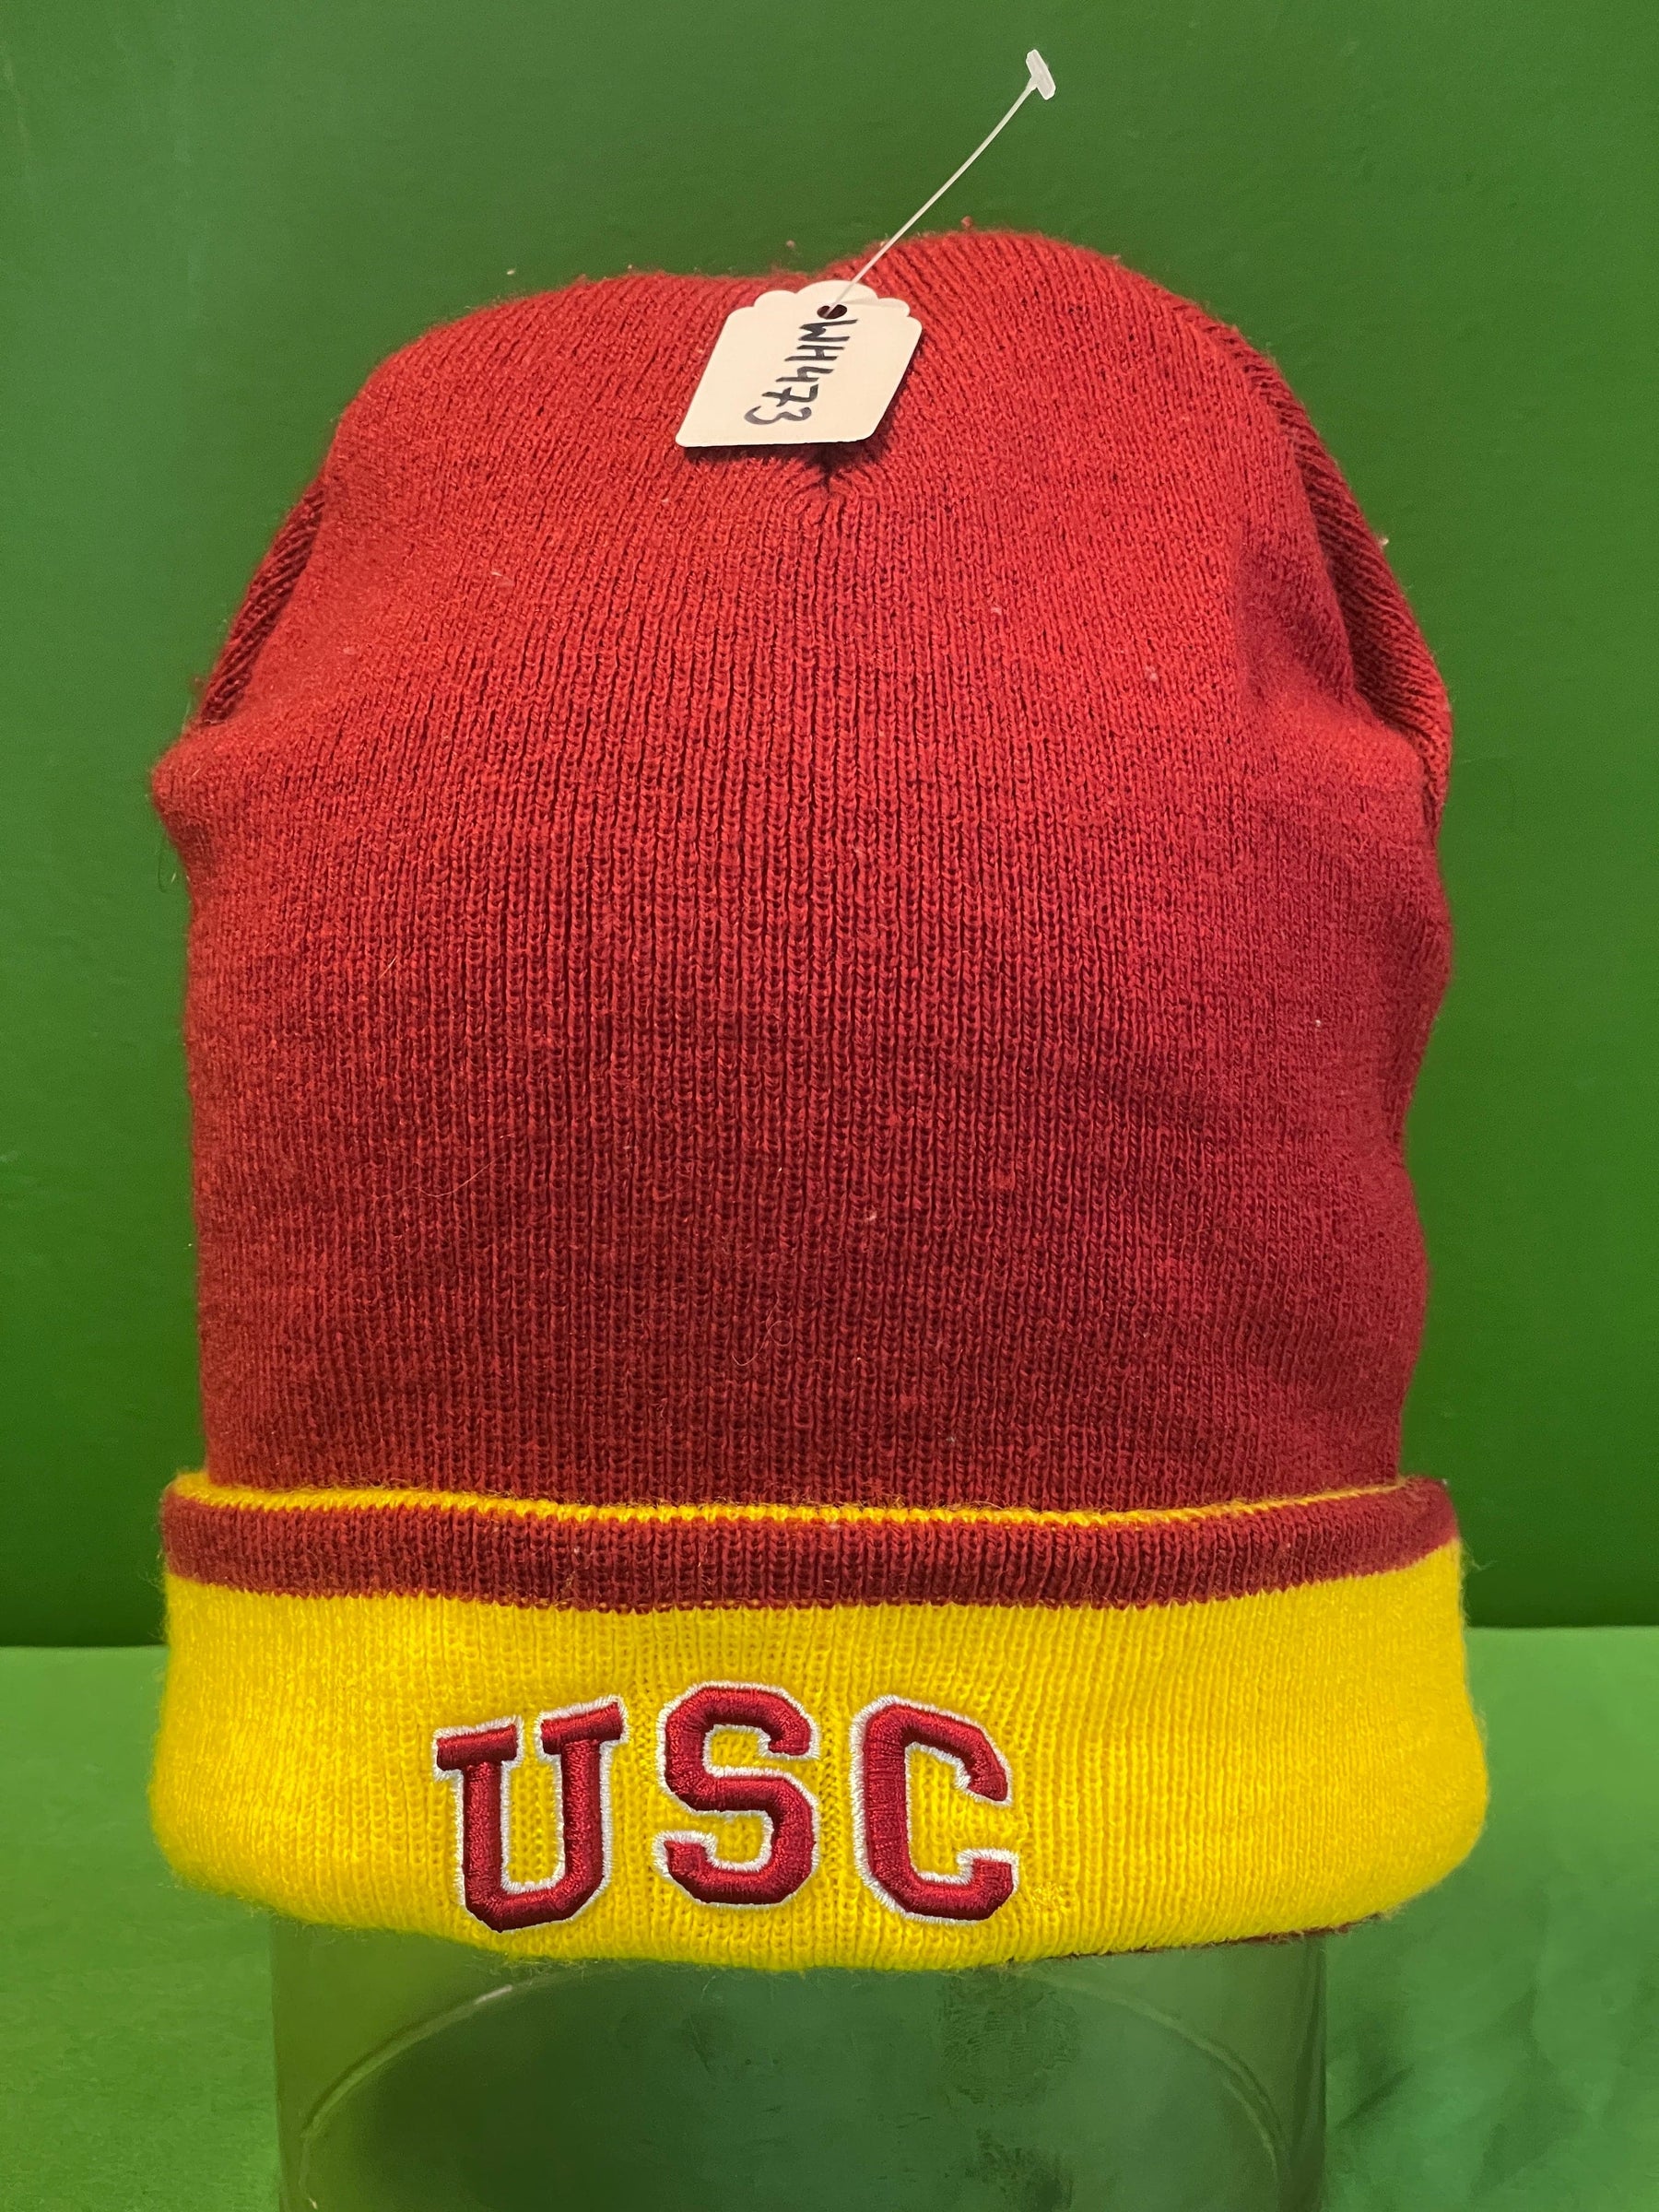 NCAA USC Trojans Red & Yellow Woolly Hat Beanie OSFM